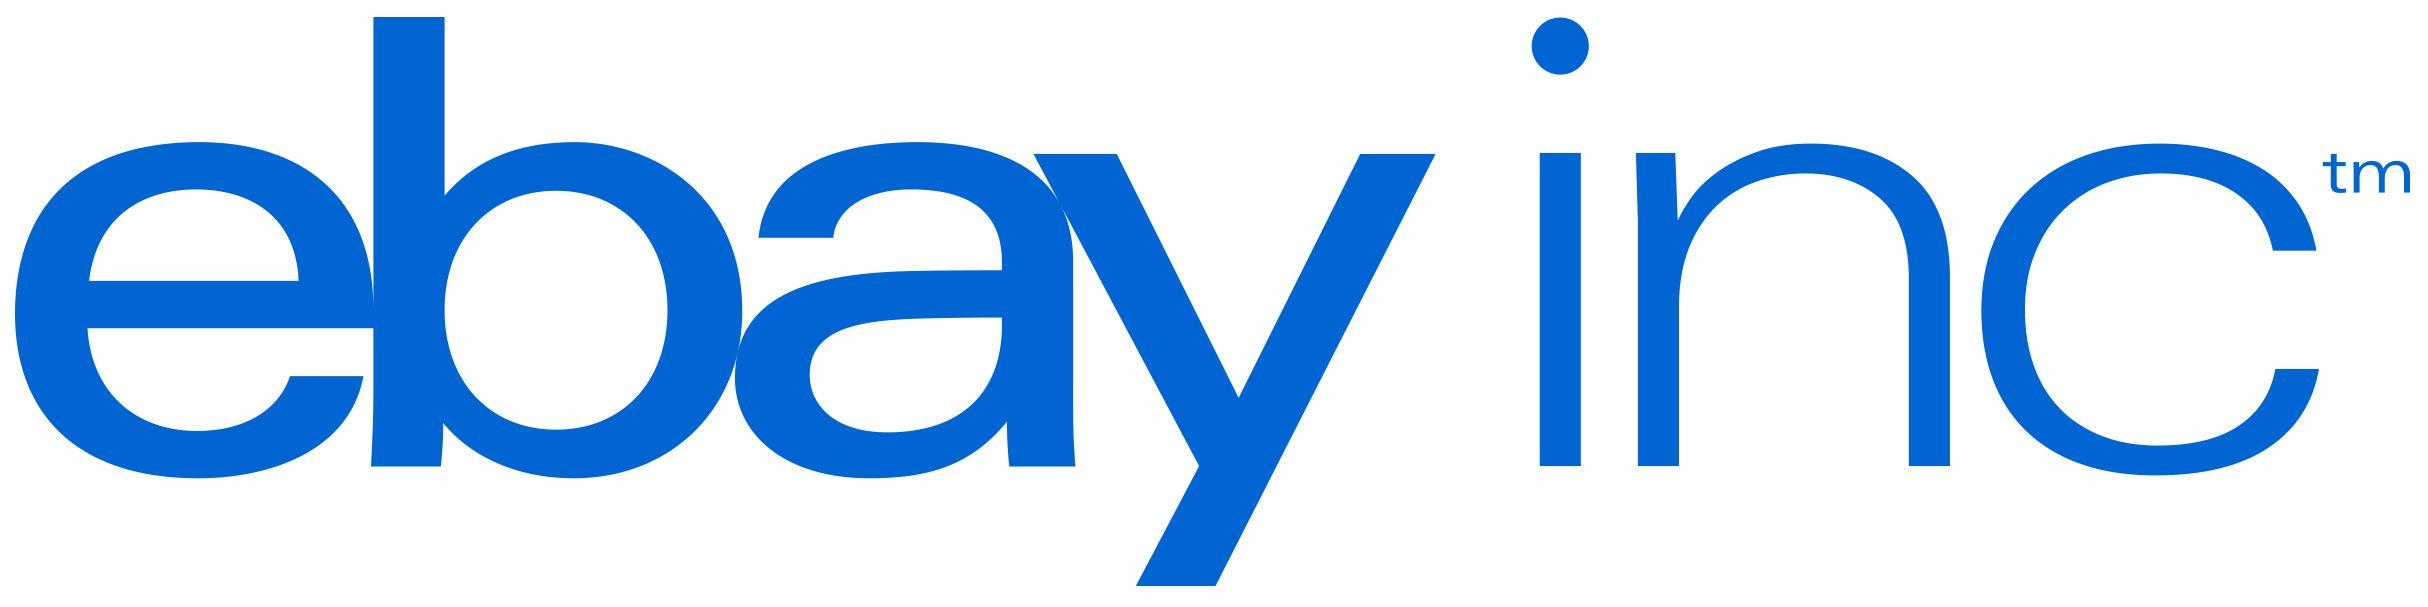 eBay Company Logo - eBay Inc. Issues Letter to Shareholders